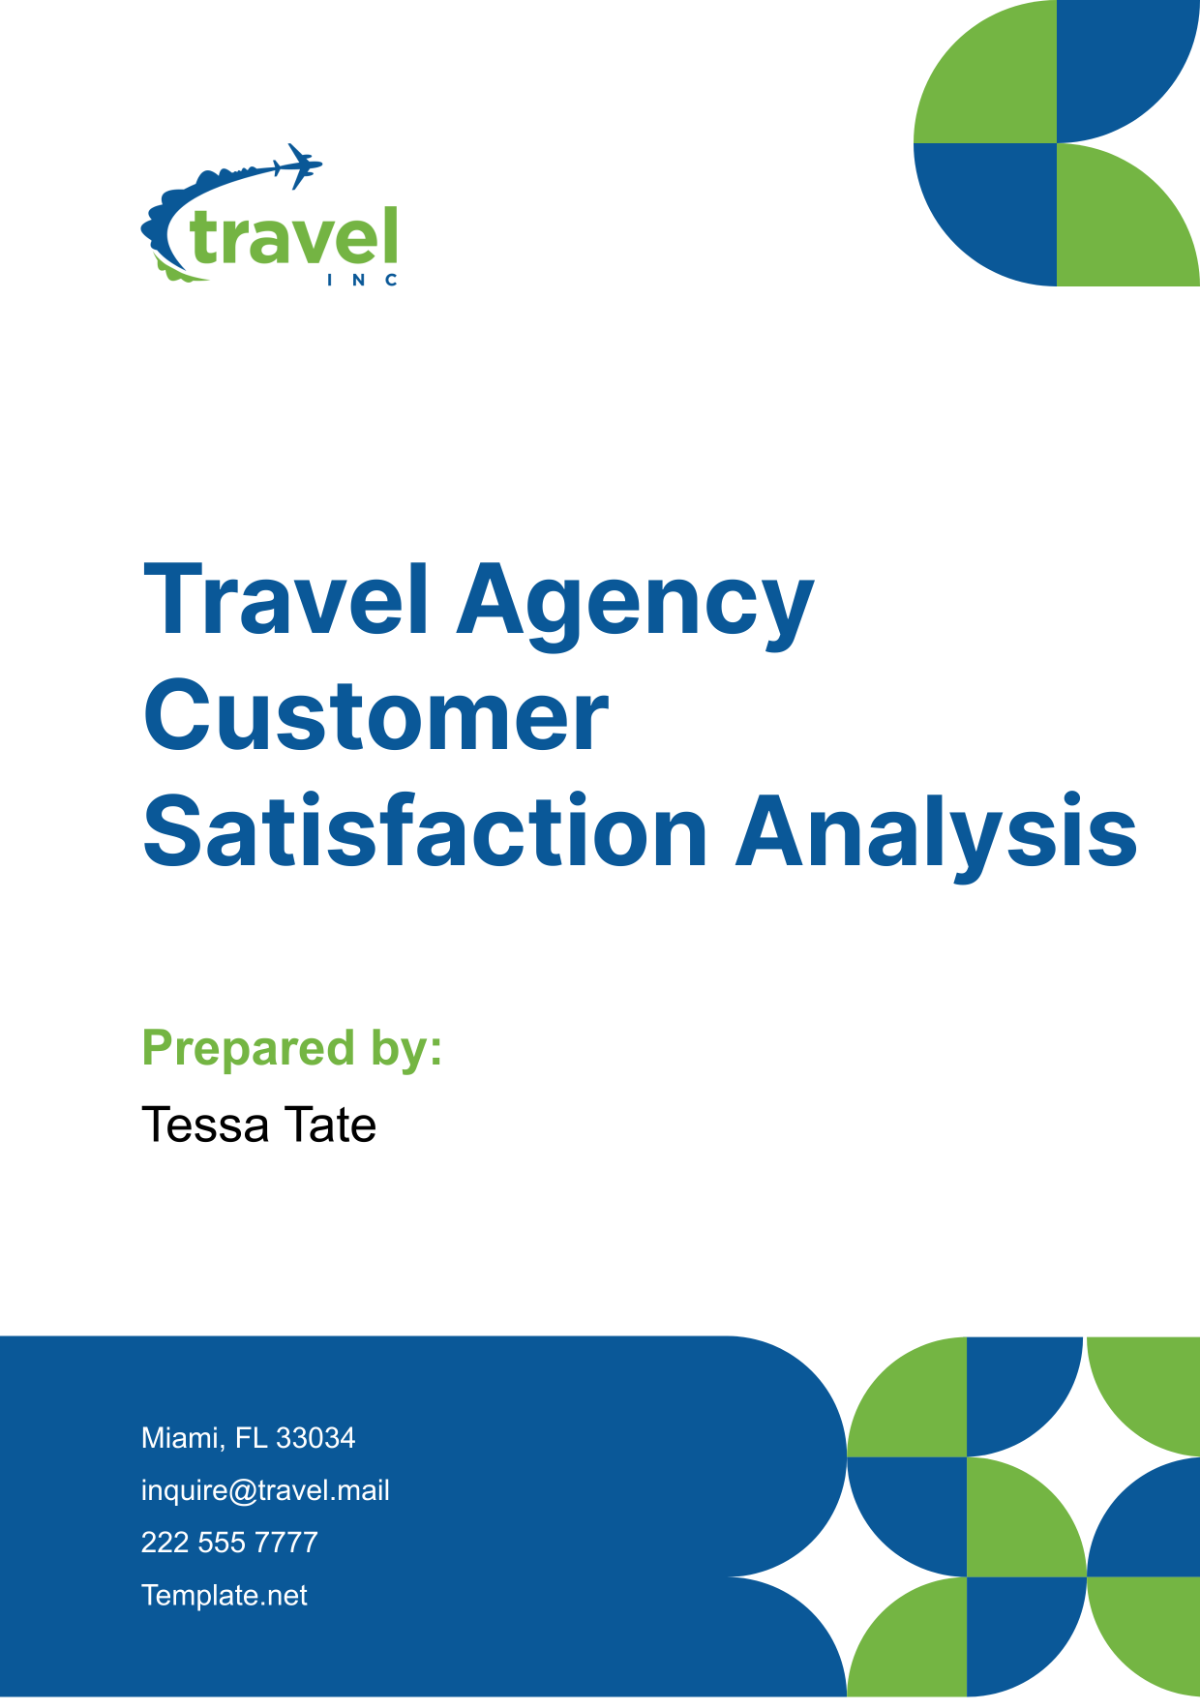 Travel Agency Customer Satisfaction Analysis Template